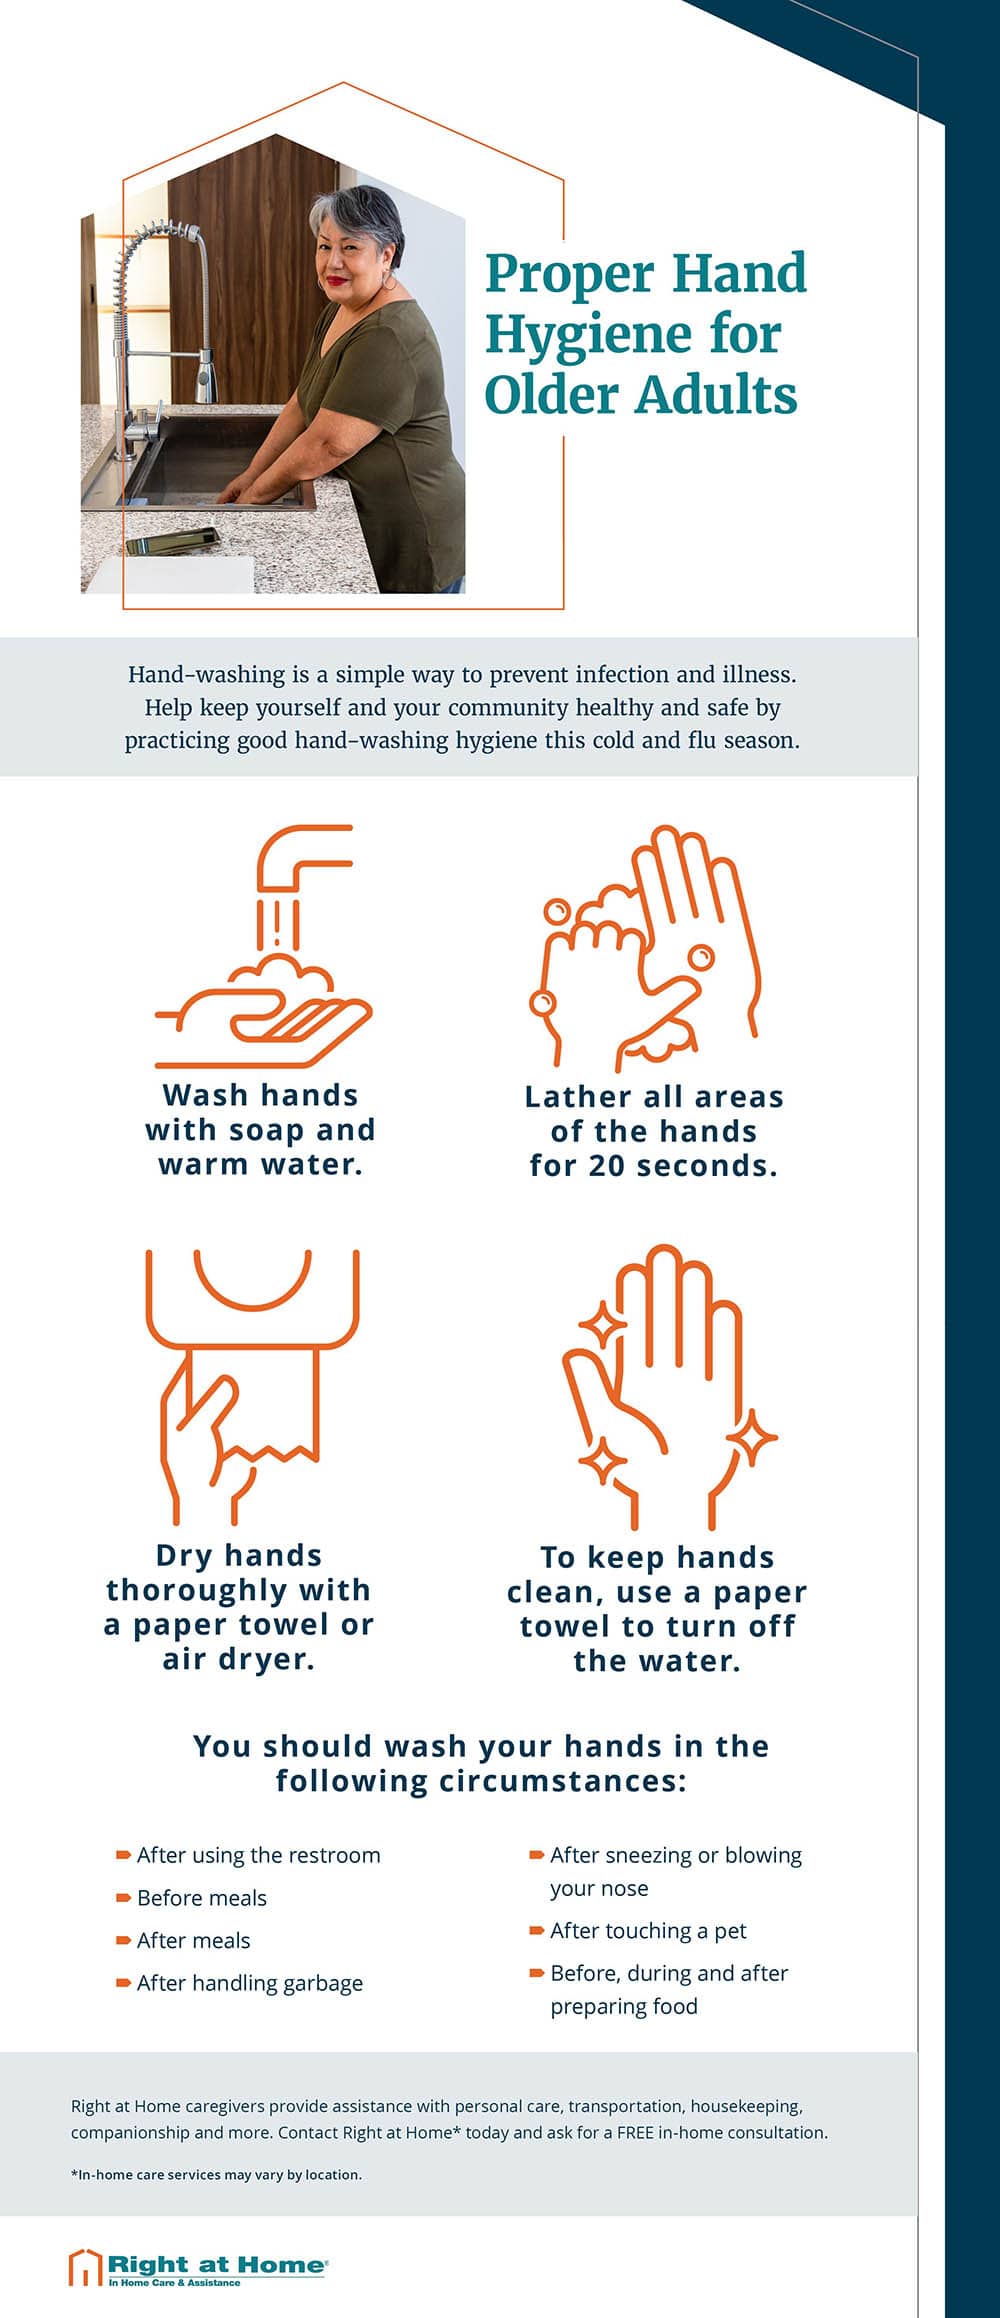 proper hand hygiene for older adults - infographic image